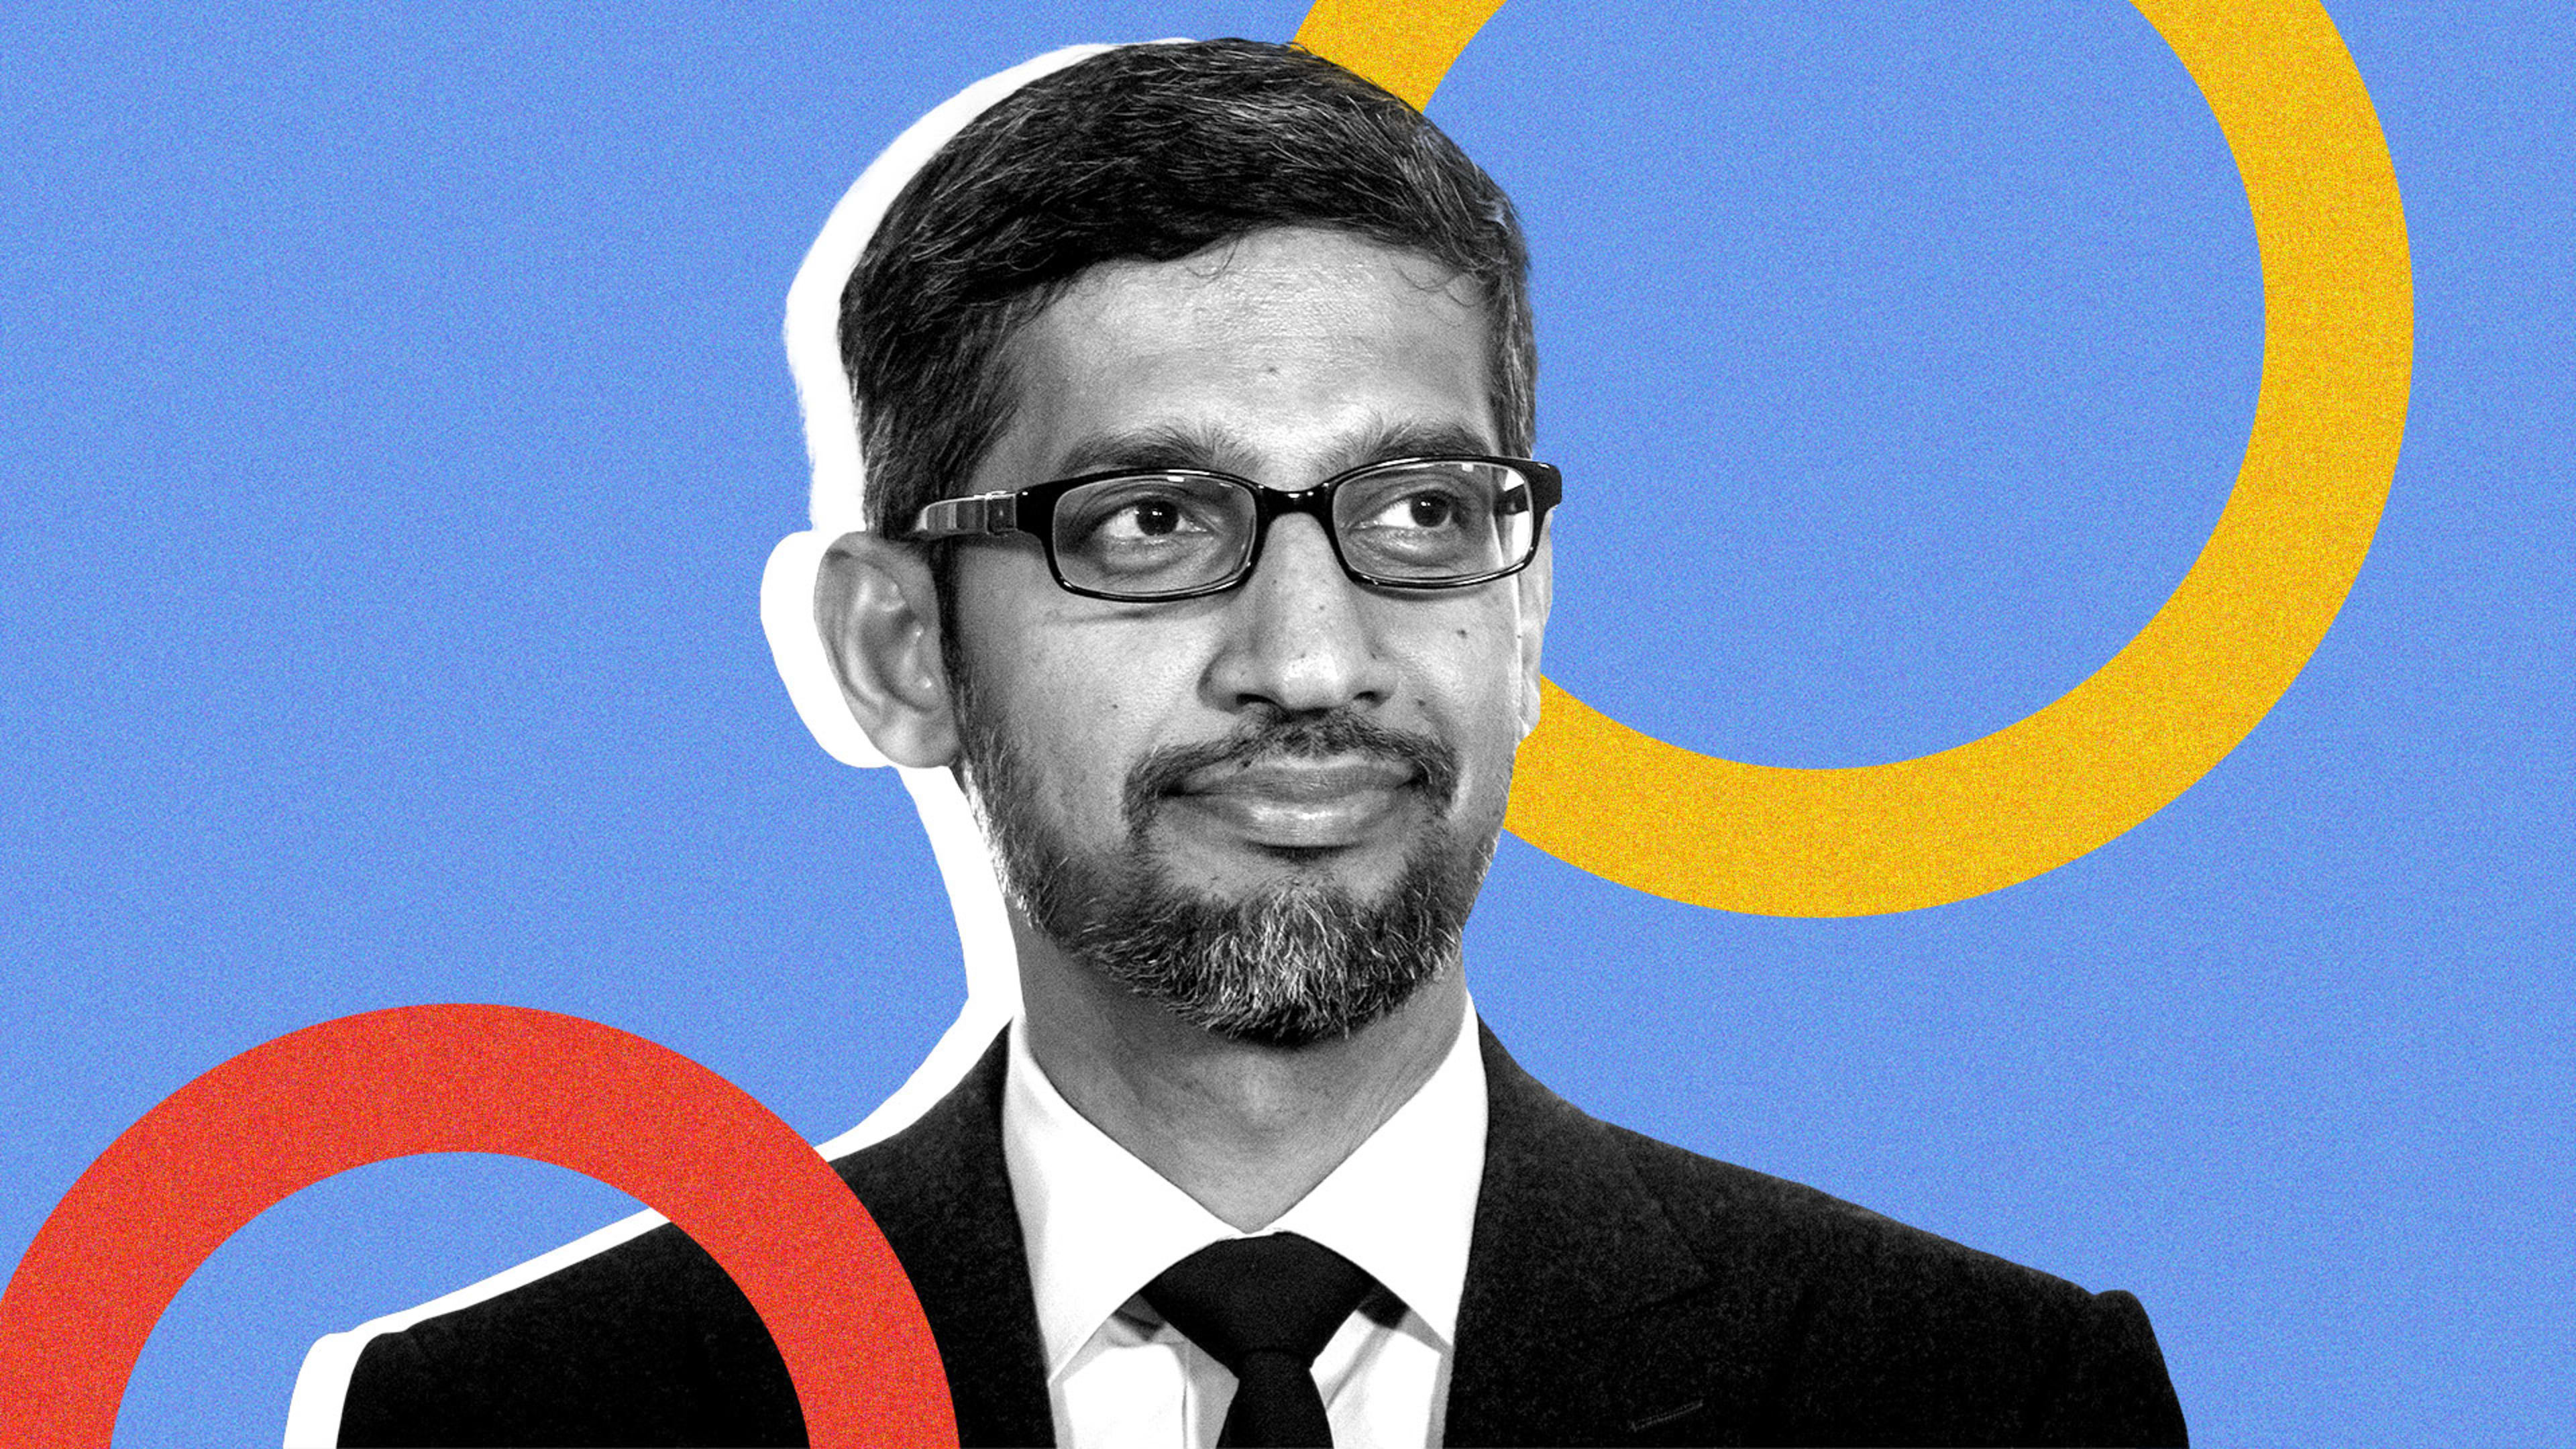 Larry Page steps down as CEO of Alphabet, hands control to Google CEO Sundar Pichai